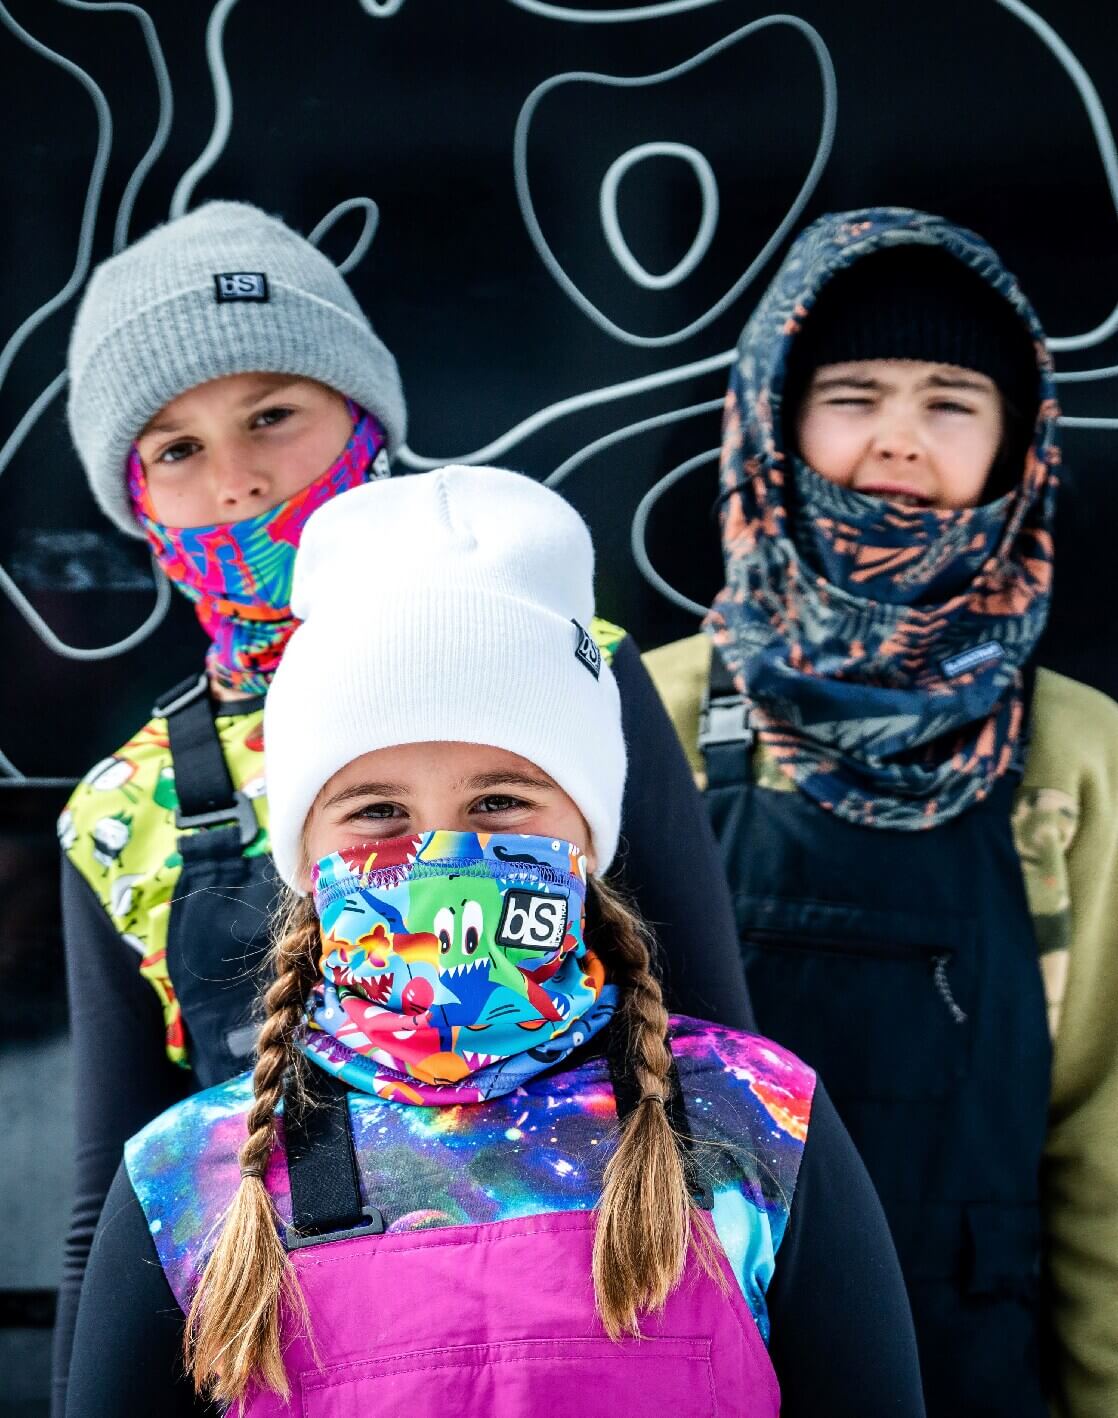 The Best Ski Masks and Ski Baclavas for Snow Season 2022